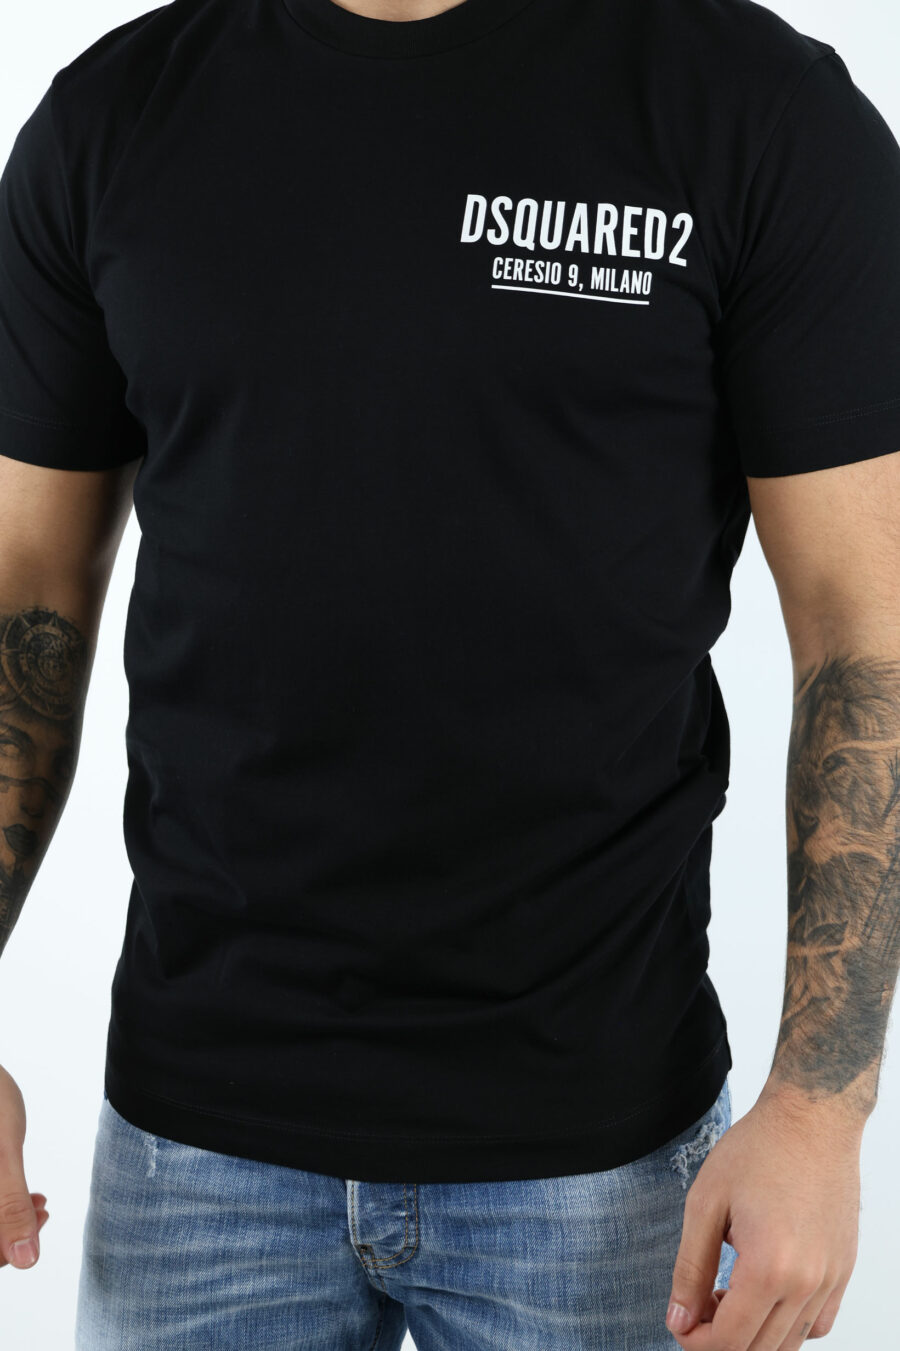 Black T-shirt with minilogo "ceresio 9, milano" - 106878